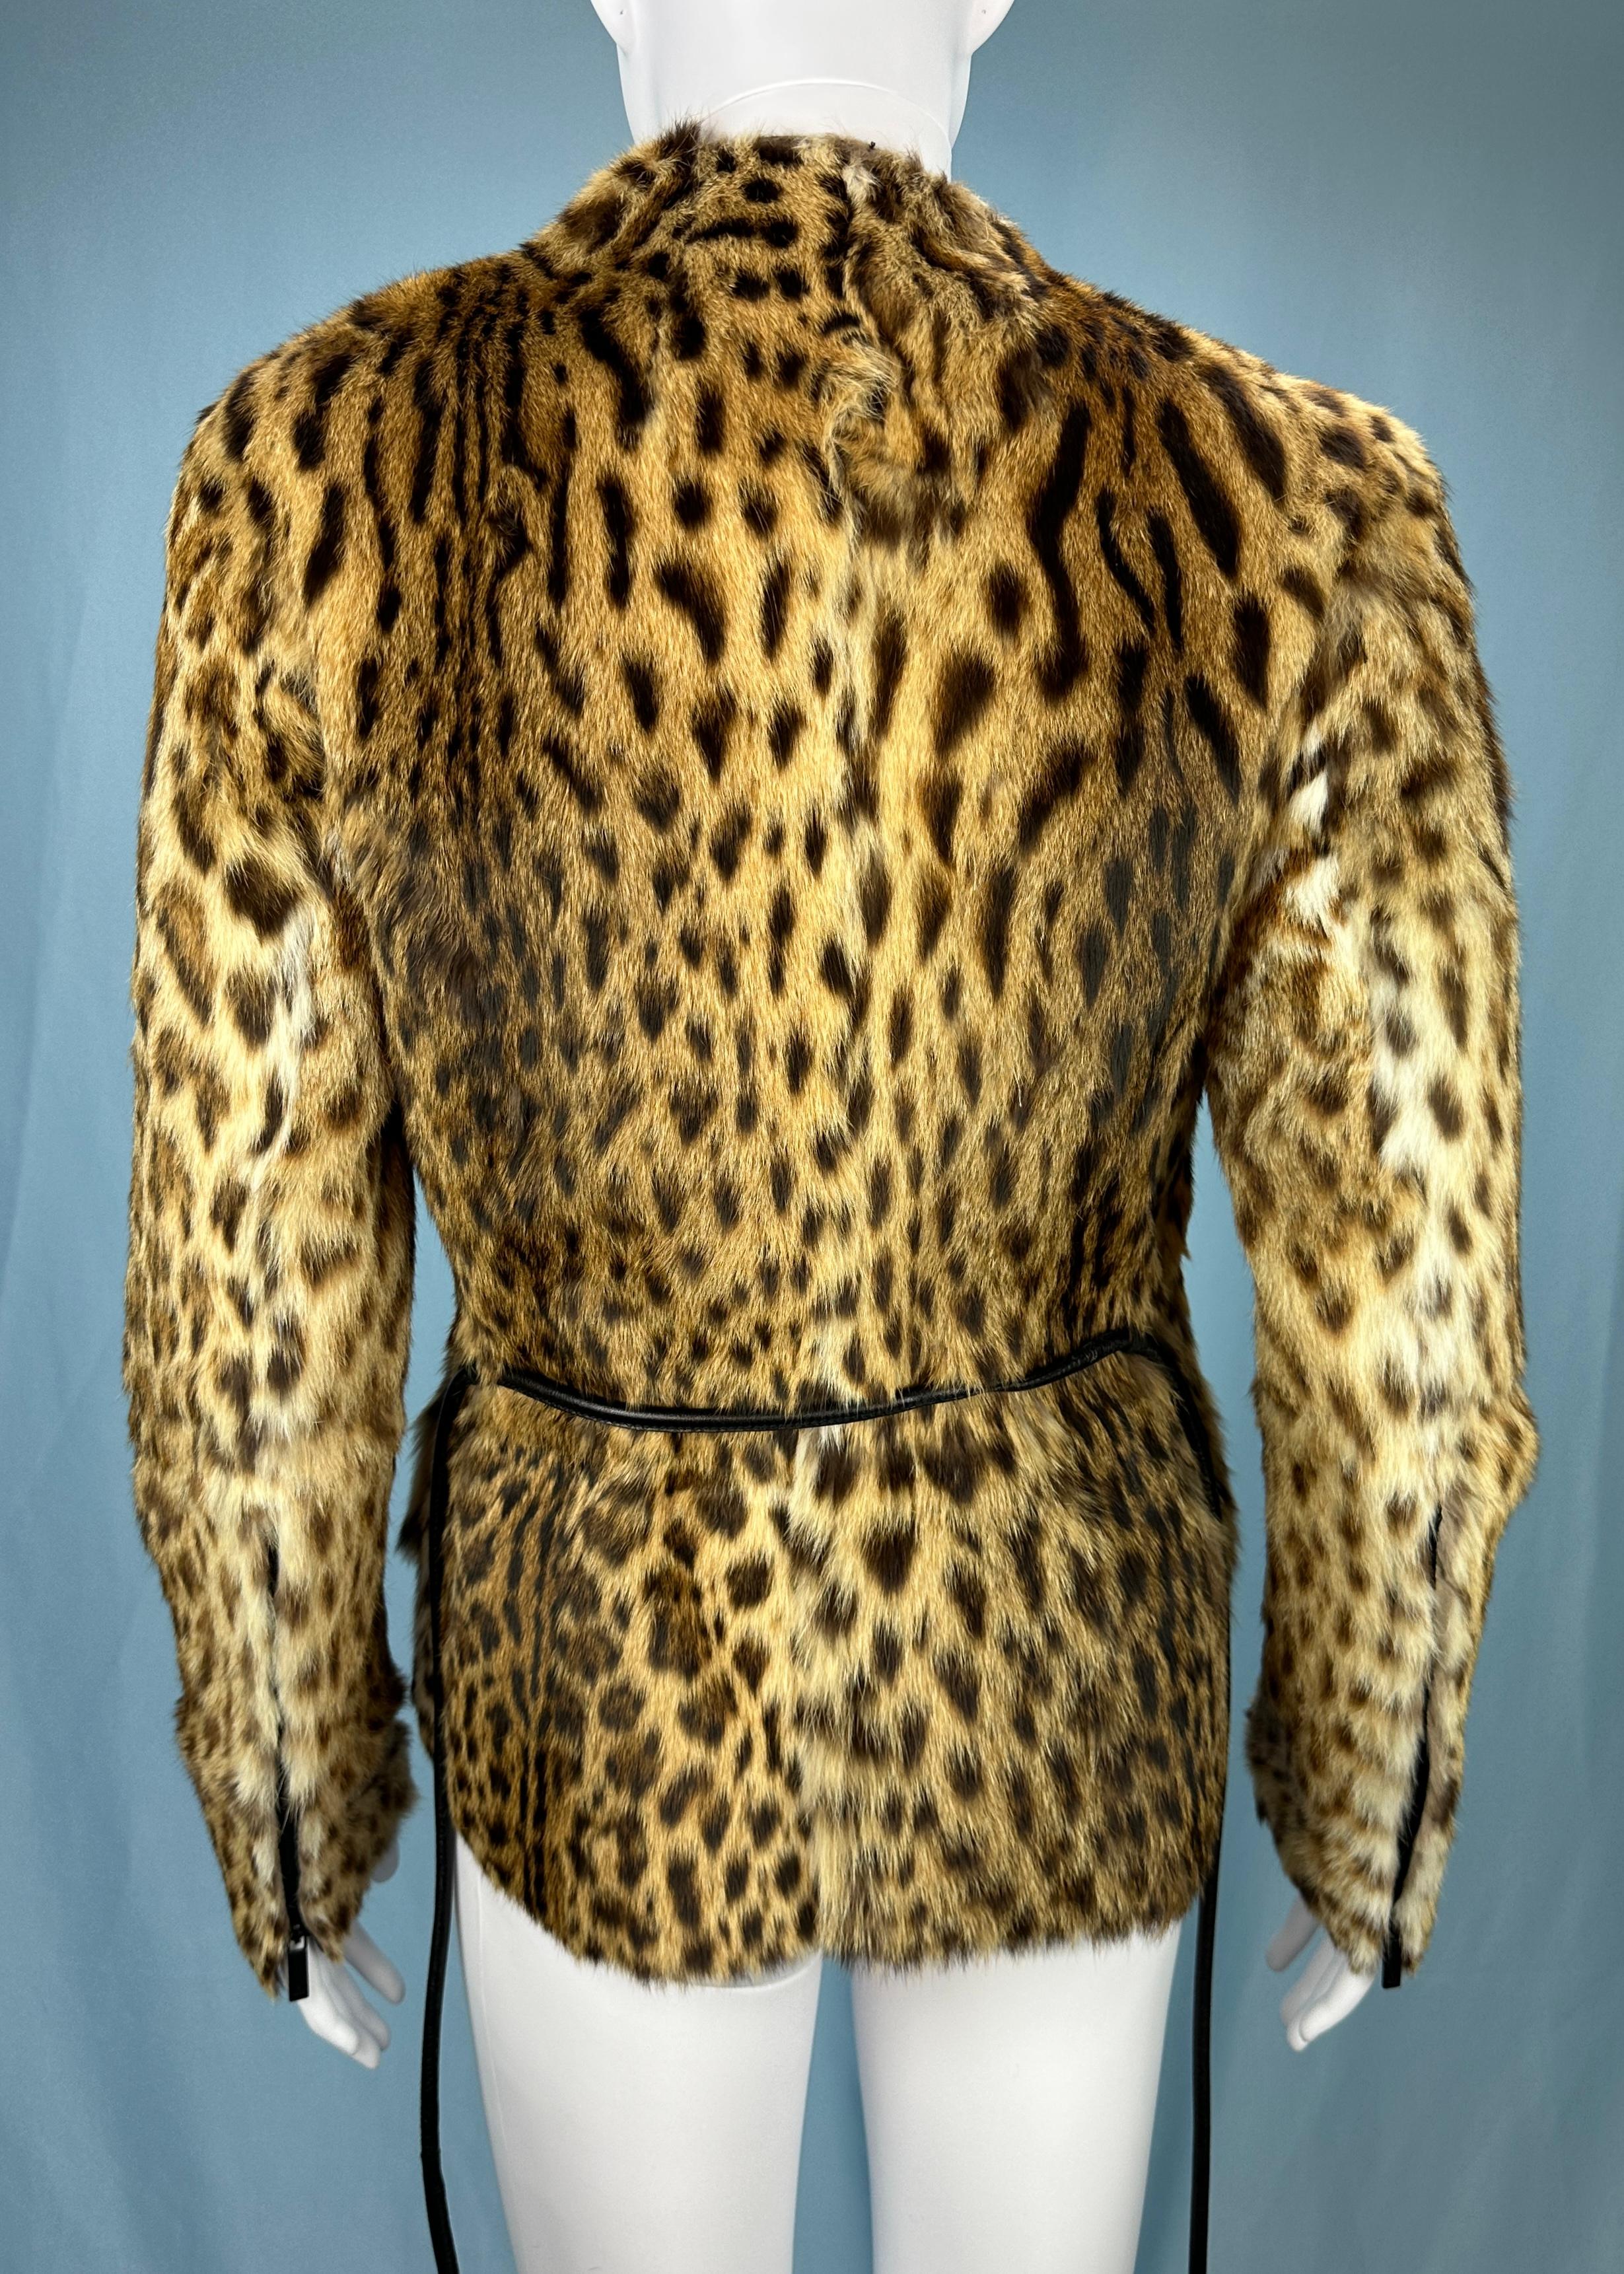 Gucci by Tom Ford Fall 1999 Runway Leopard Print Fur Jacket 4